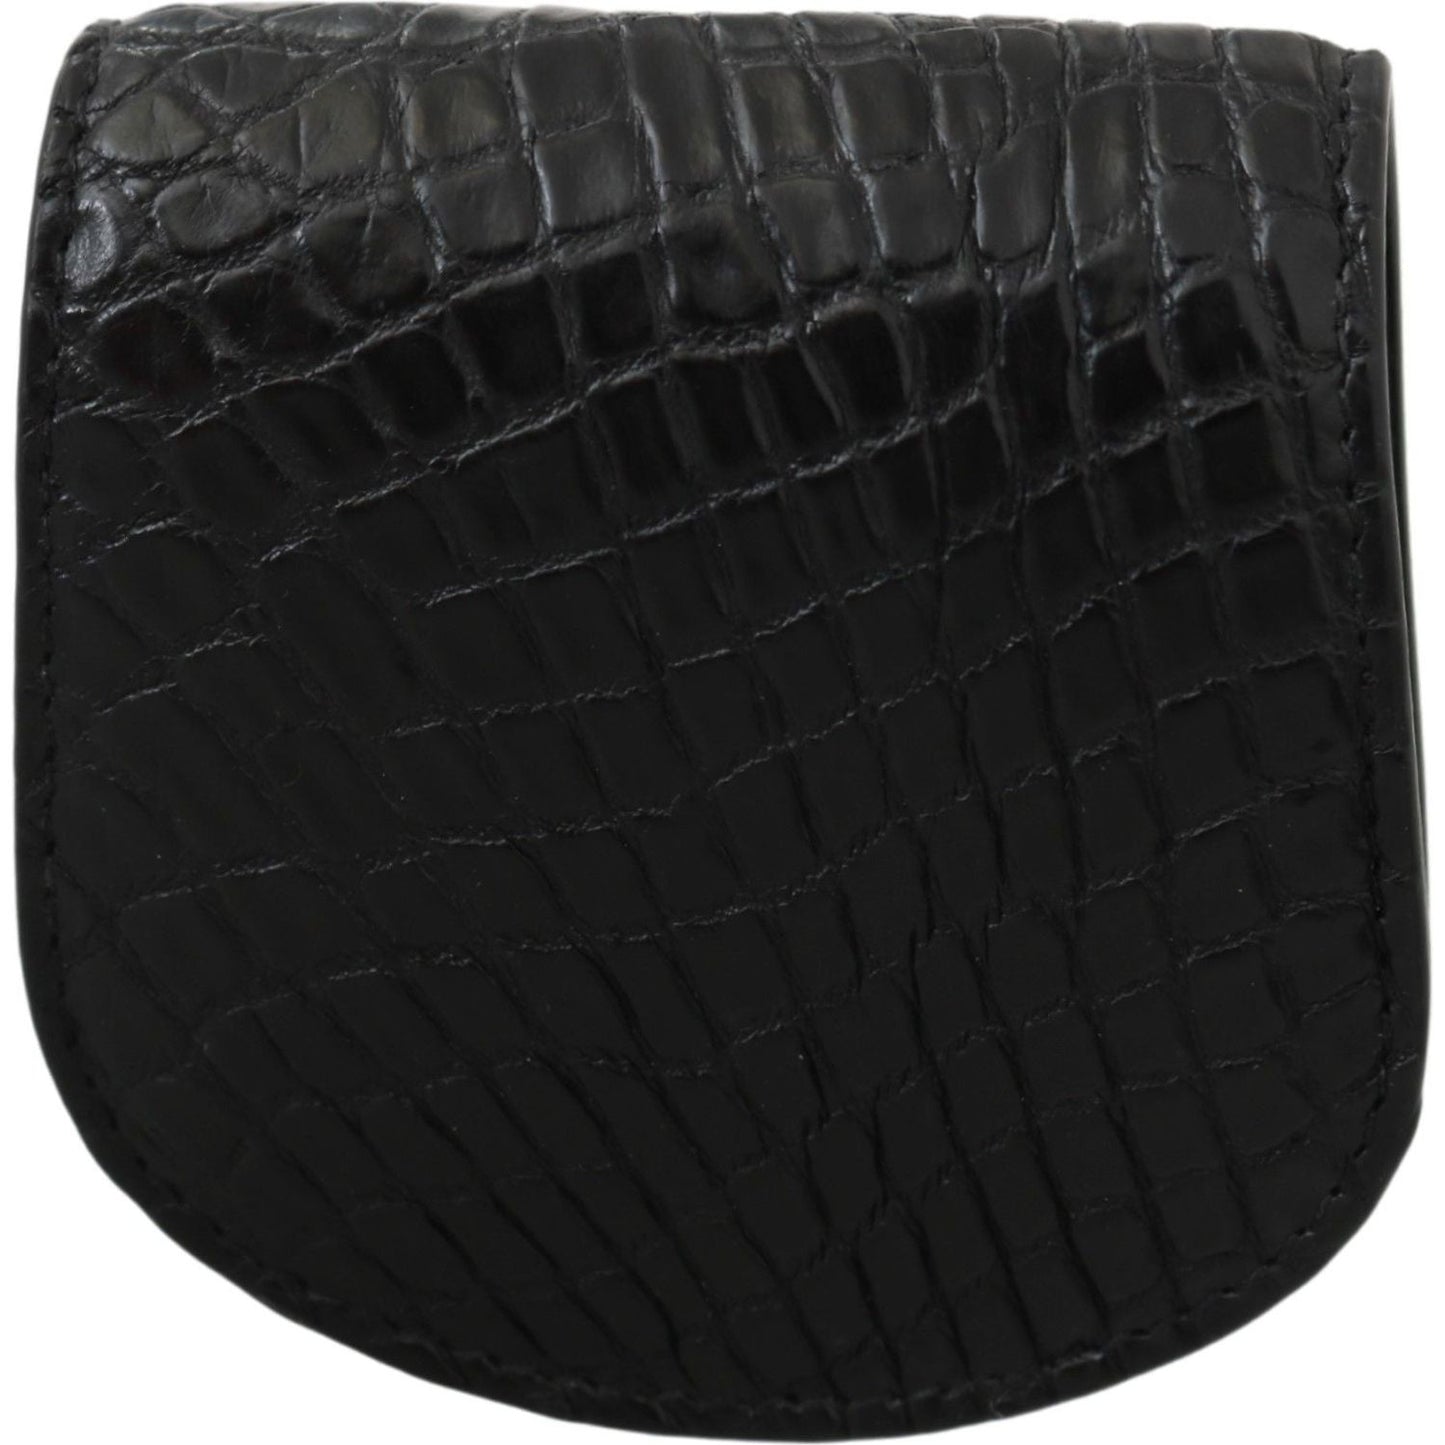 Dolce & Gabbana Sleek Black Leather Coin Case Wallet Condom Case black-exotic-skin-pocket-condom-case-holder IMG_0231-c9437a12-07a.jpg